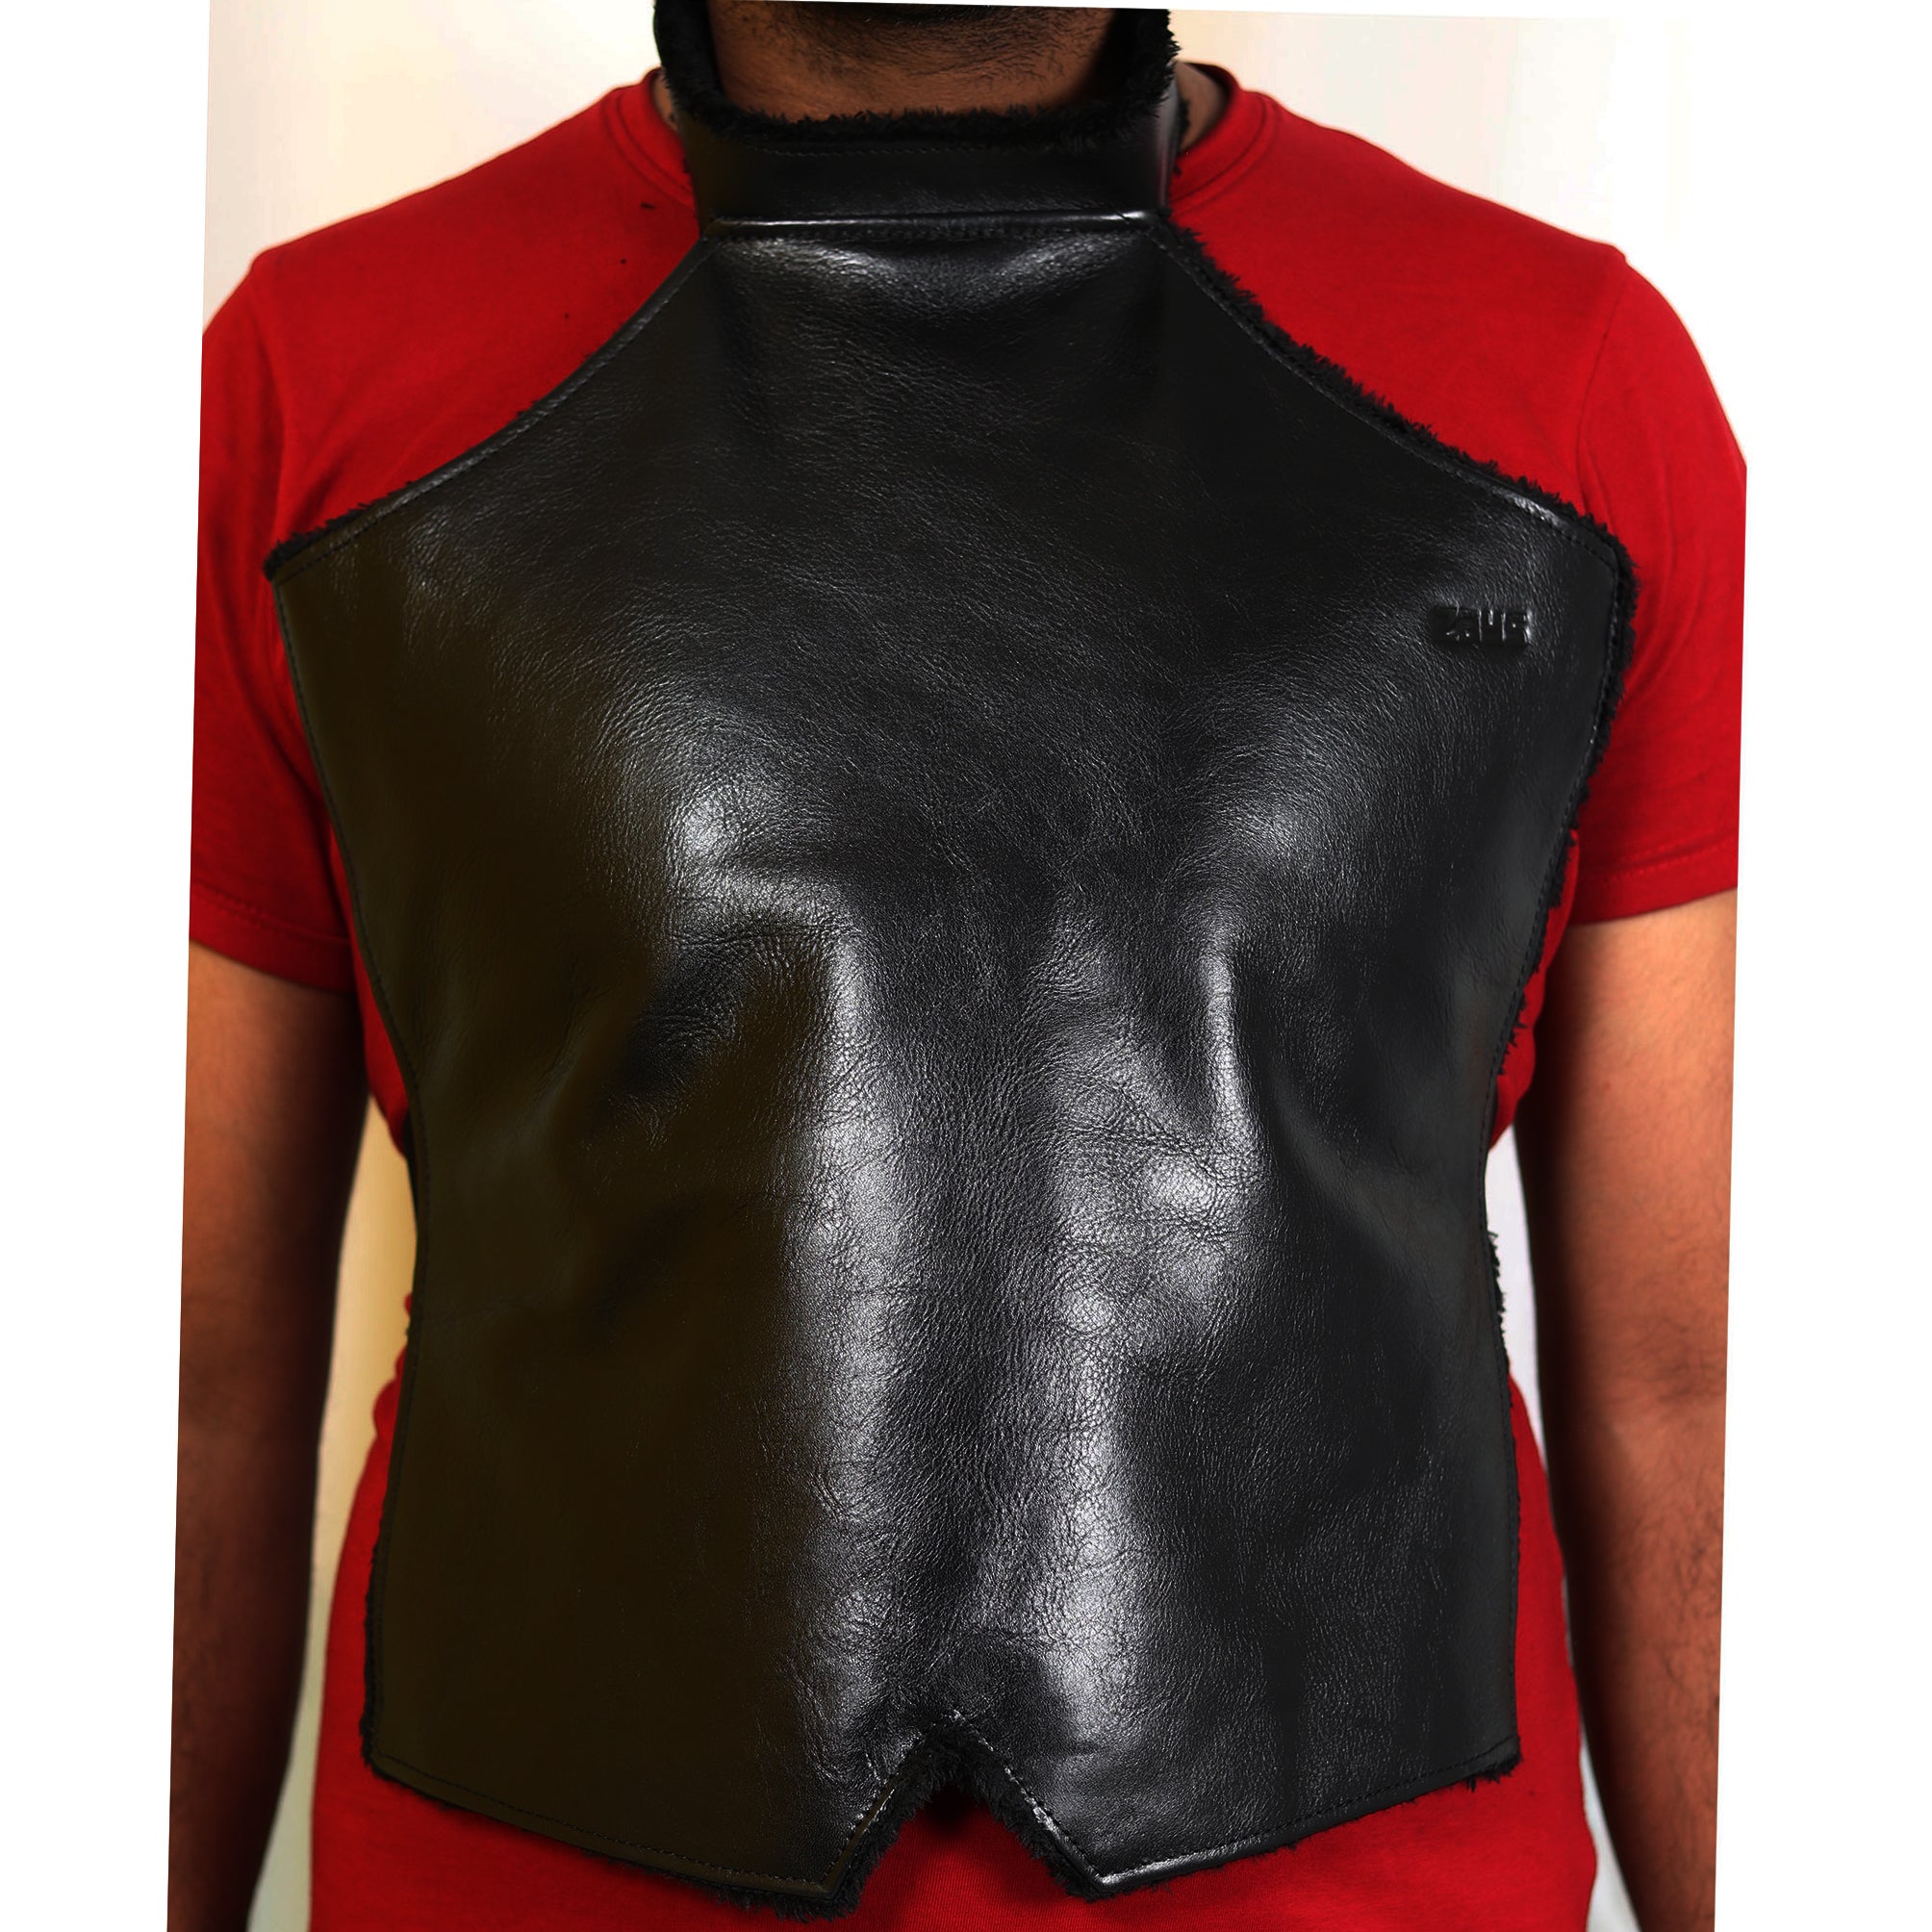 Zays Premium Leather Chest Guard Winter Protection For Biker (Black) - ZAYSCG01